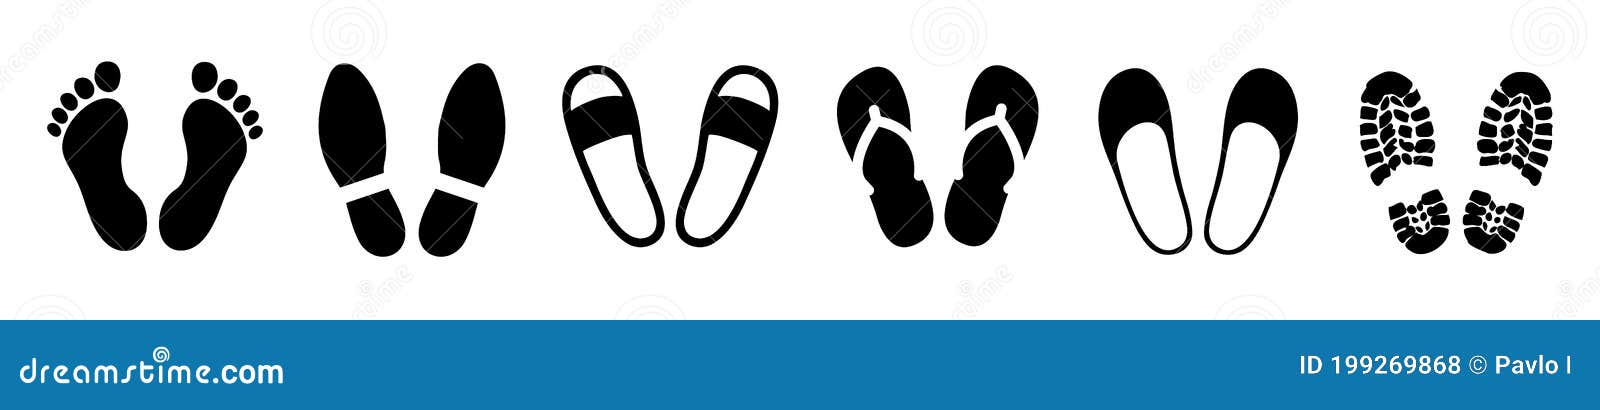 set shoeprints, footprint, barefoot, flutter icons - 